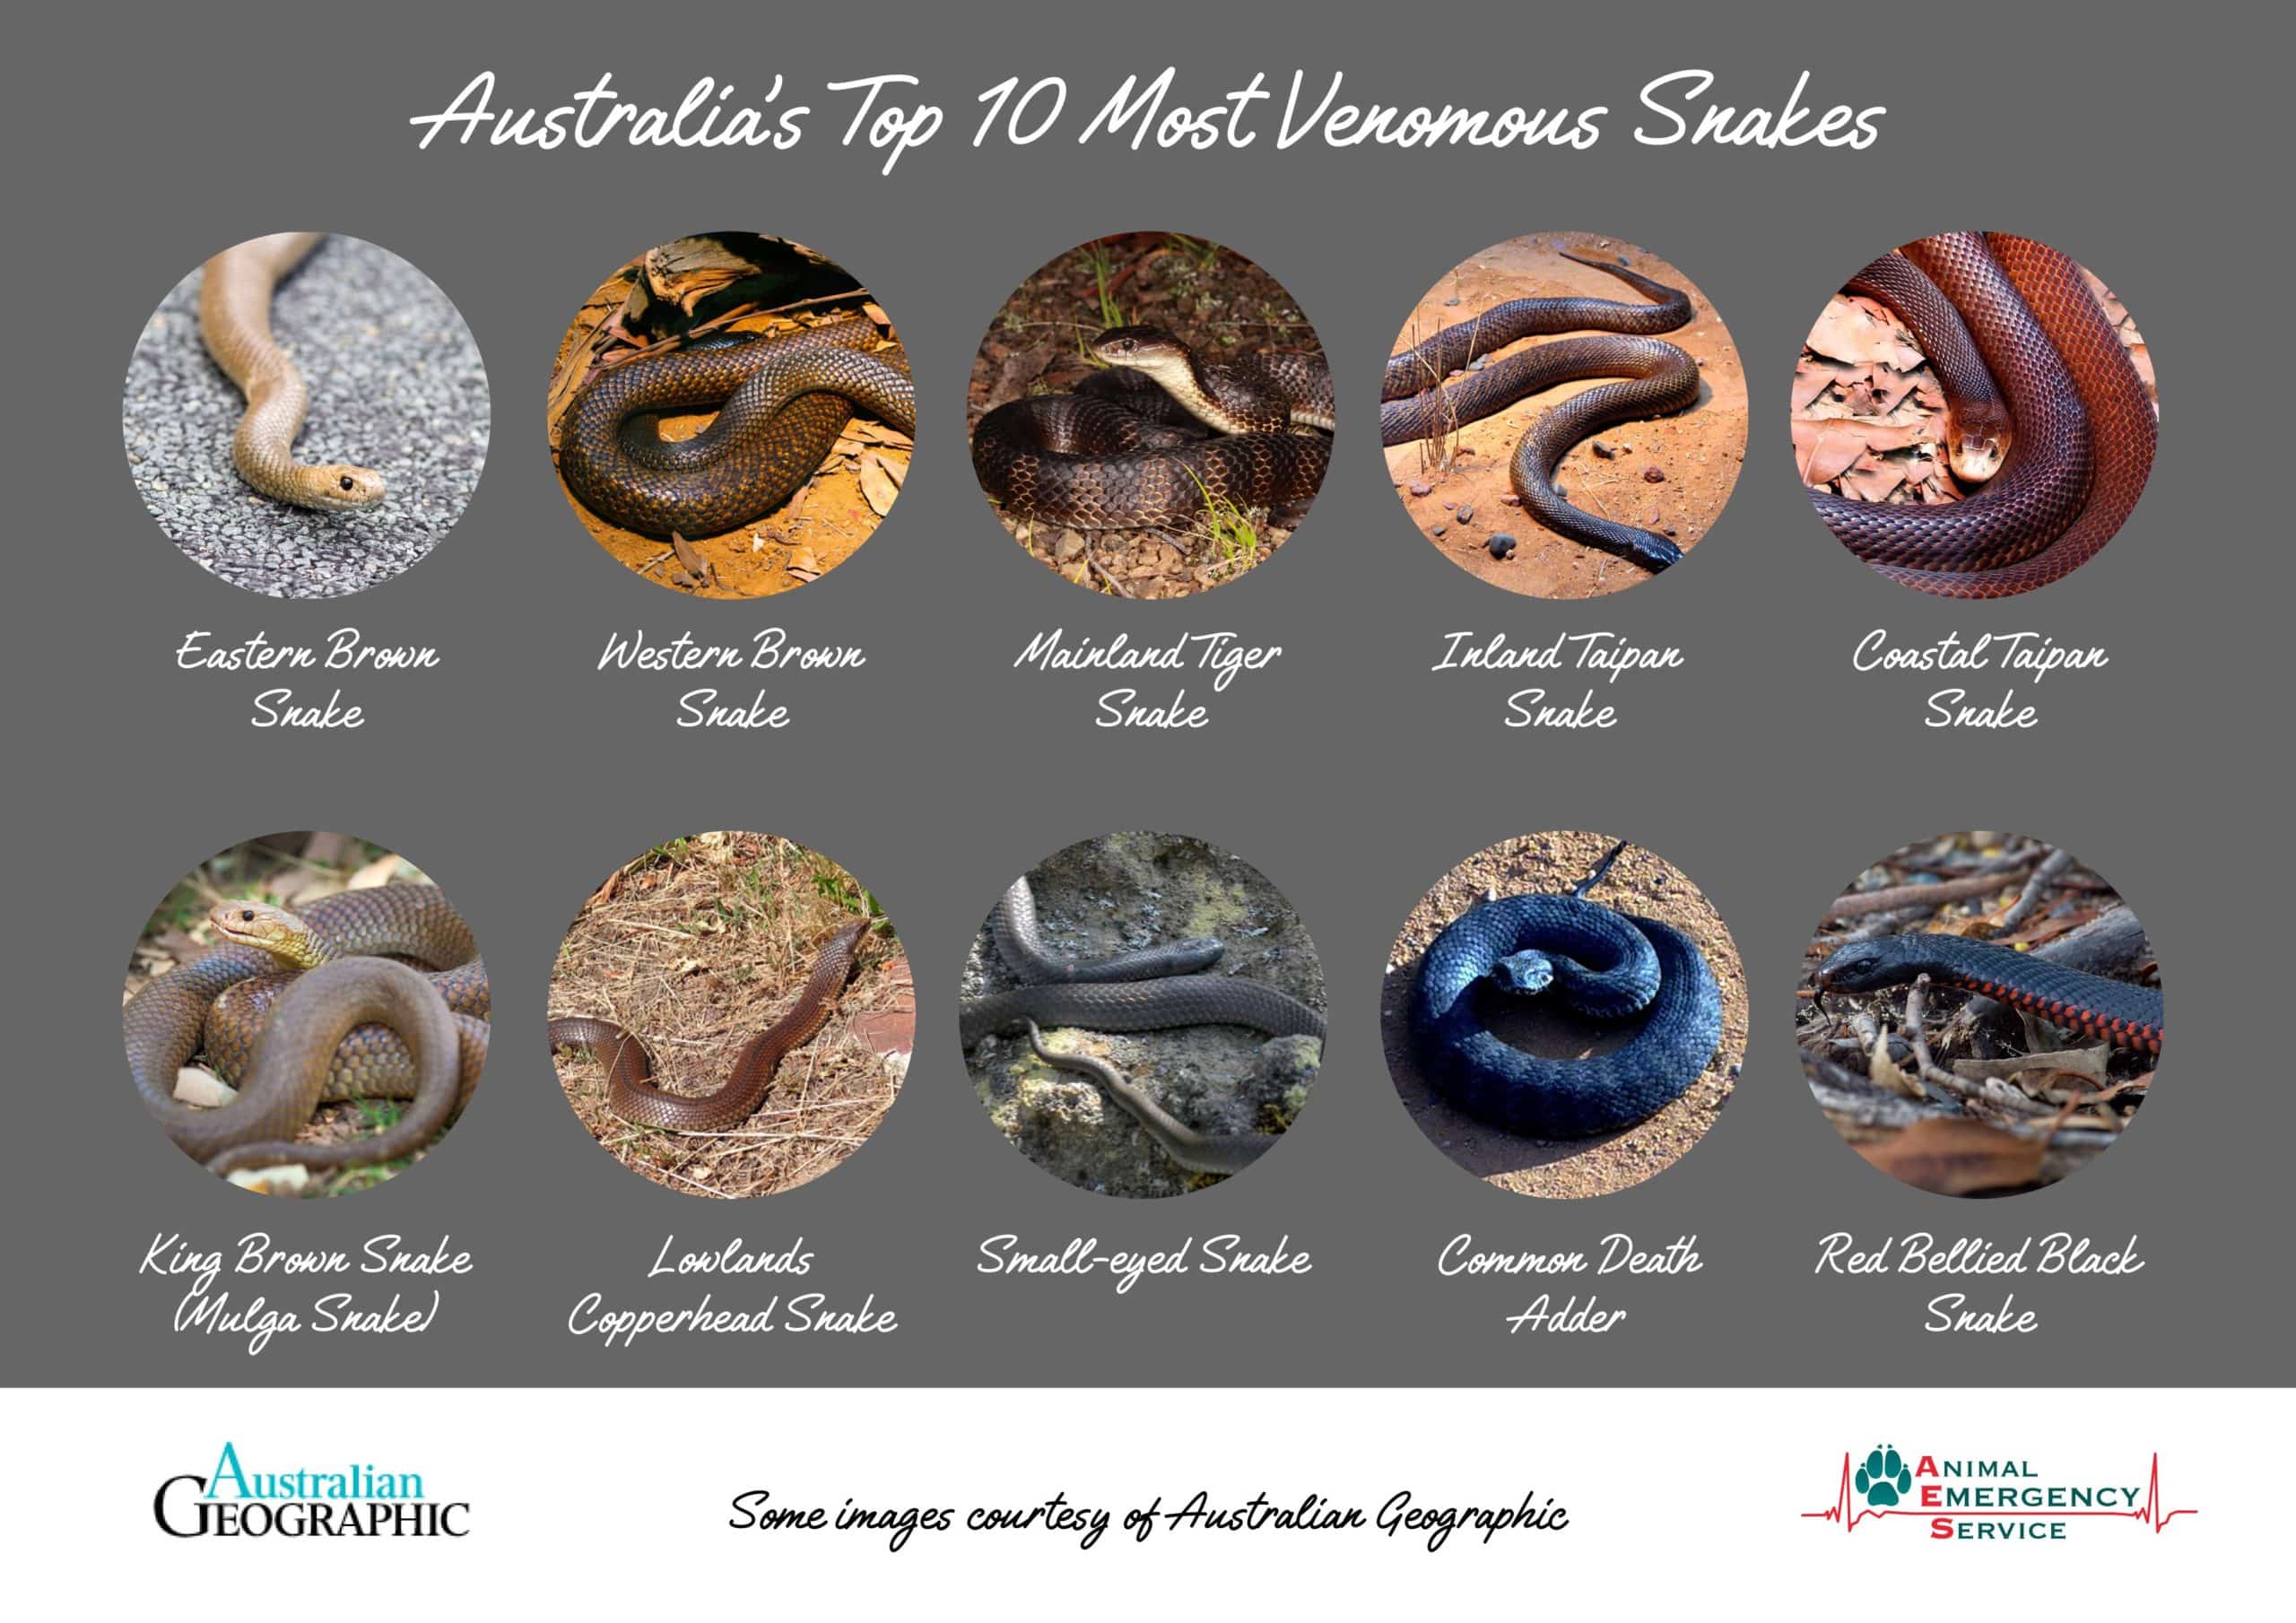 Top 10 most venomous snakes in Australia